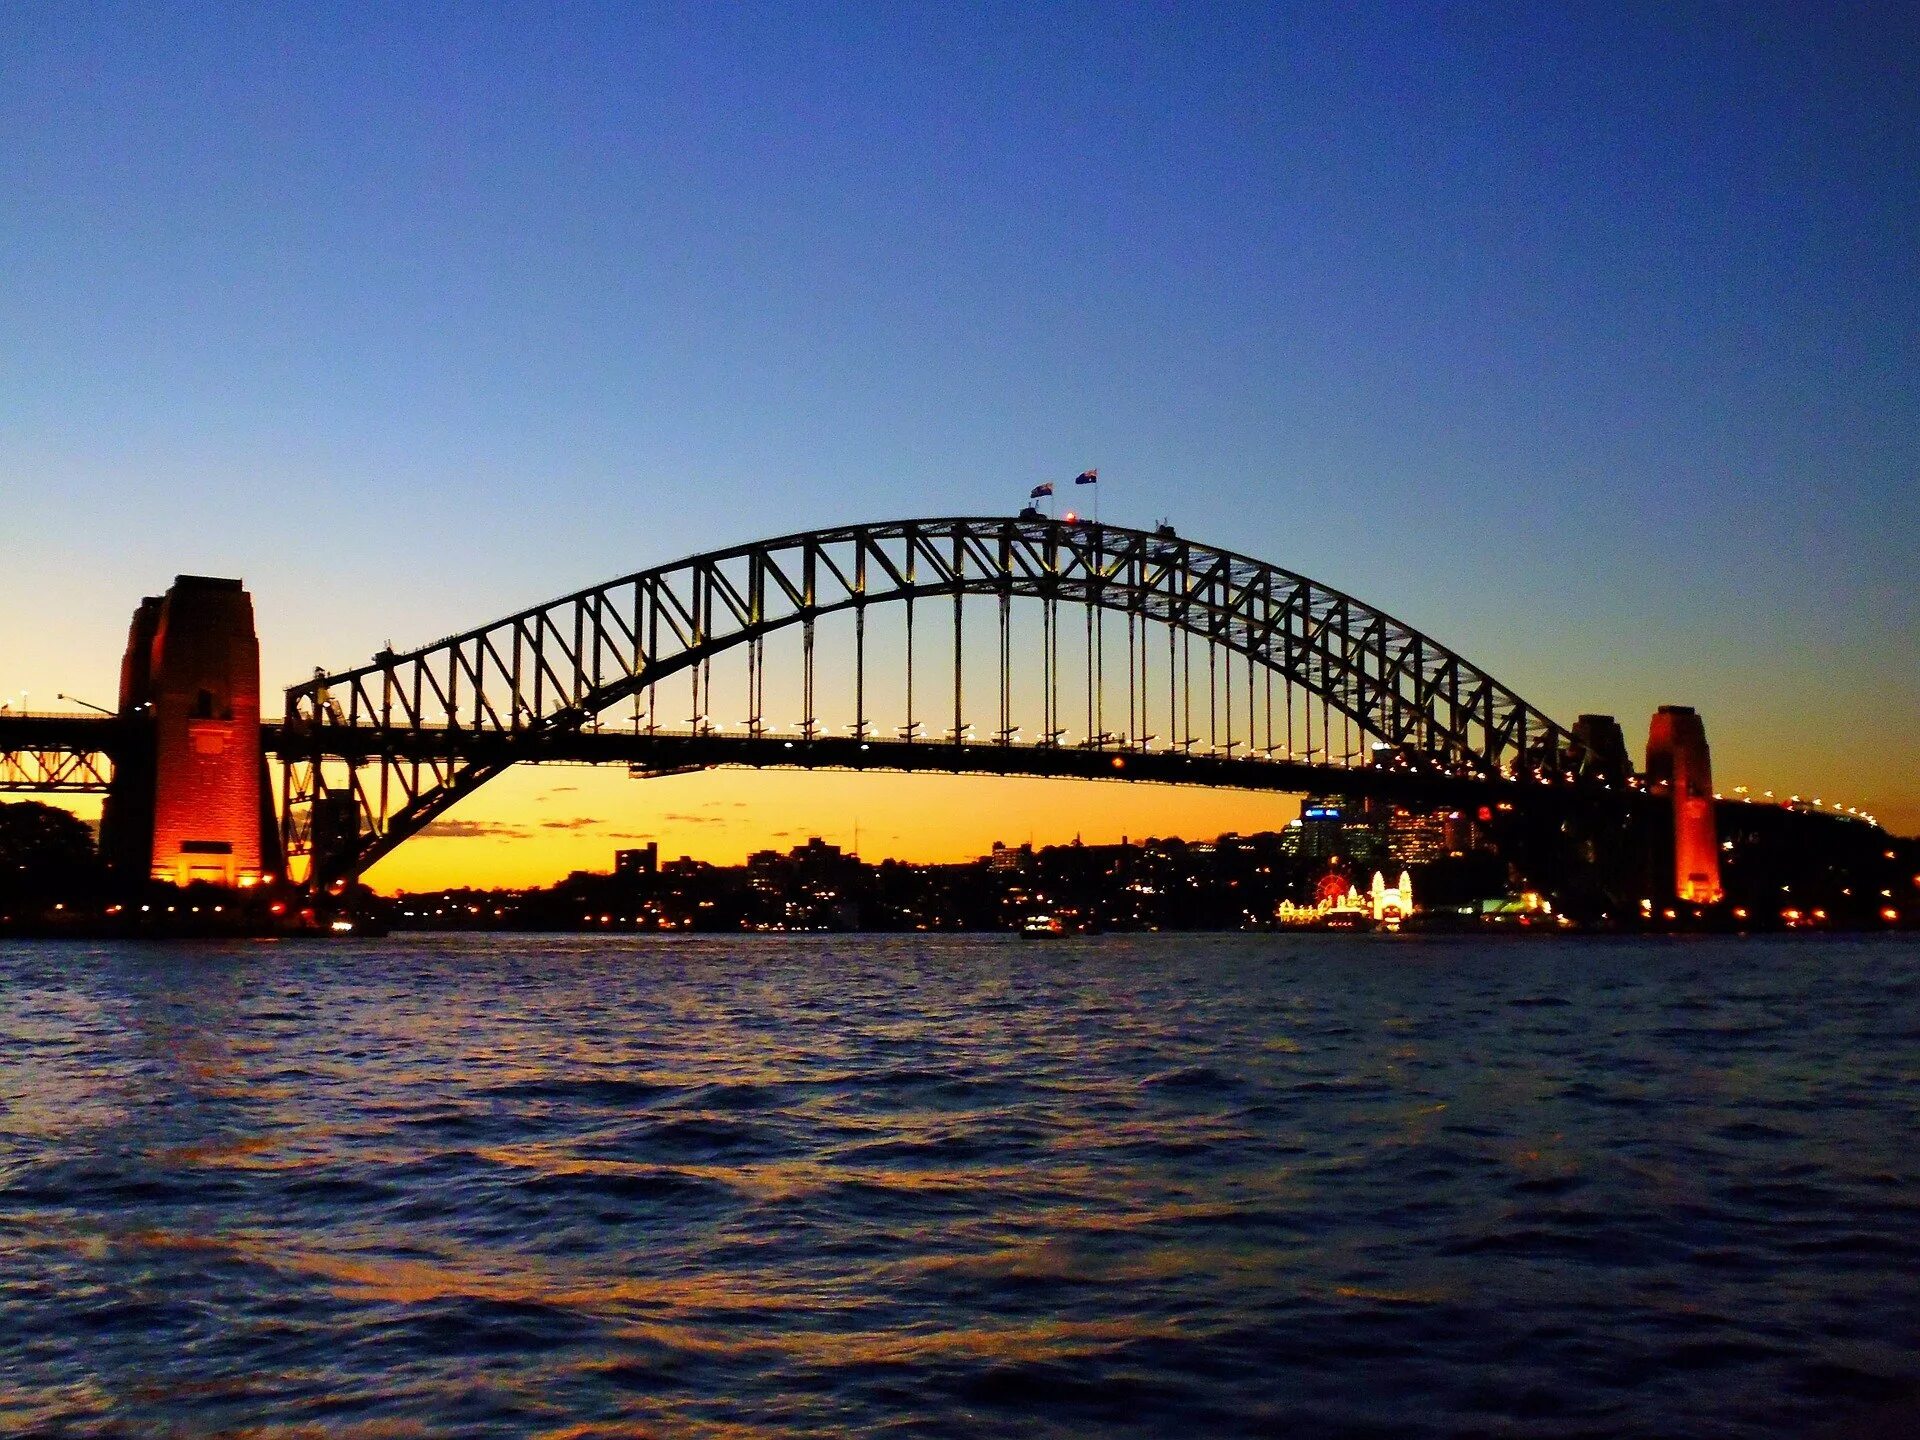 Бридж. Мост Харбор-бридж в Сиднее. Харбор-бридж (Сидней, Австралия). Мост Харбор бридж в Австралии. Сиднейский арочный мост Харбор-бридж..